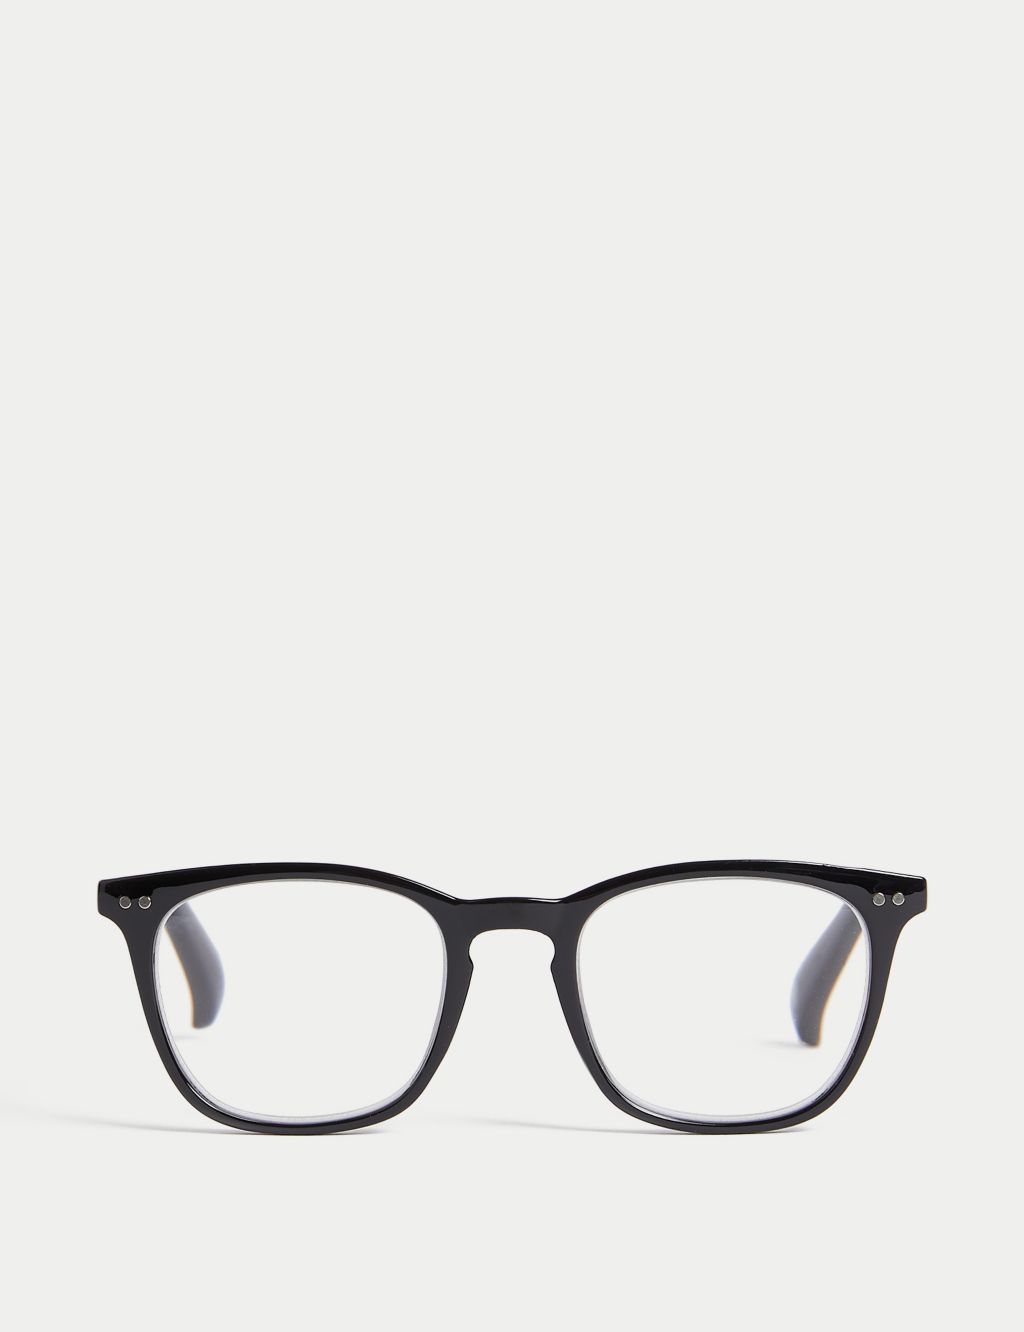 Circular Reading Glasses image 1